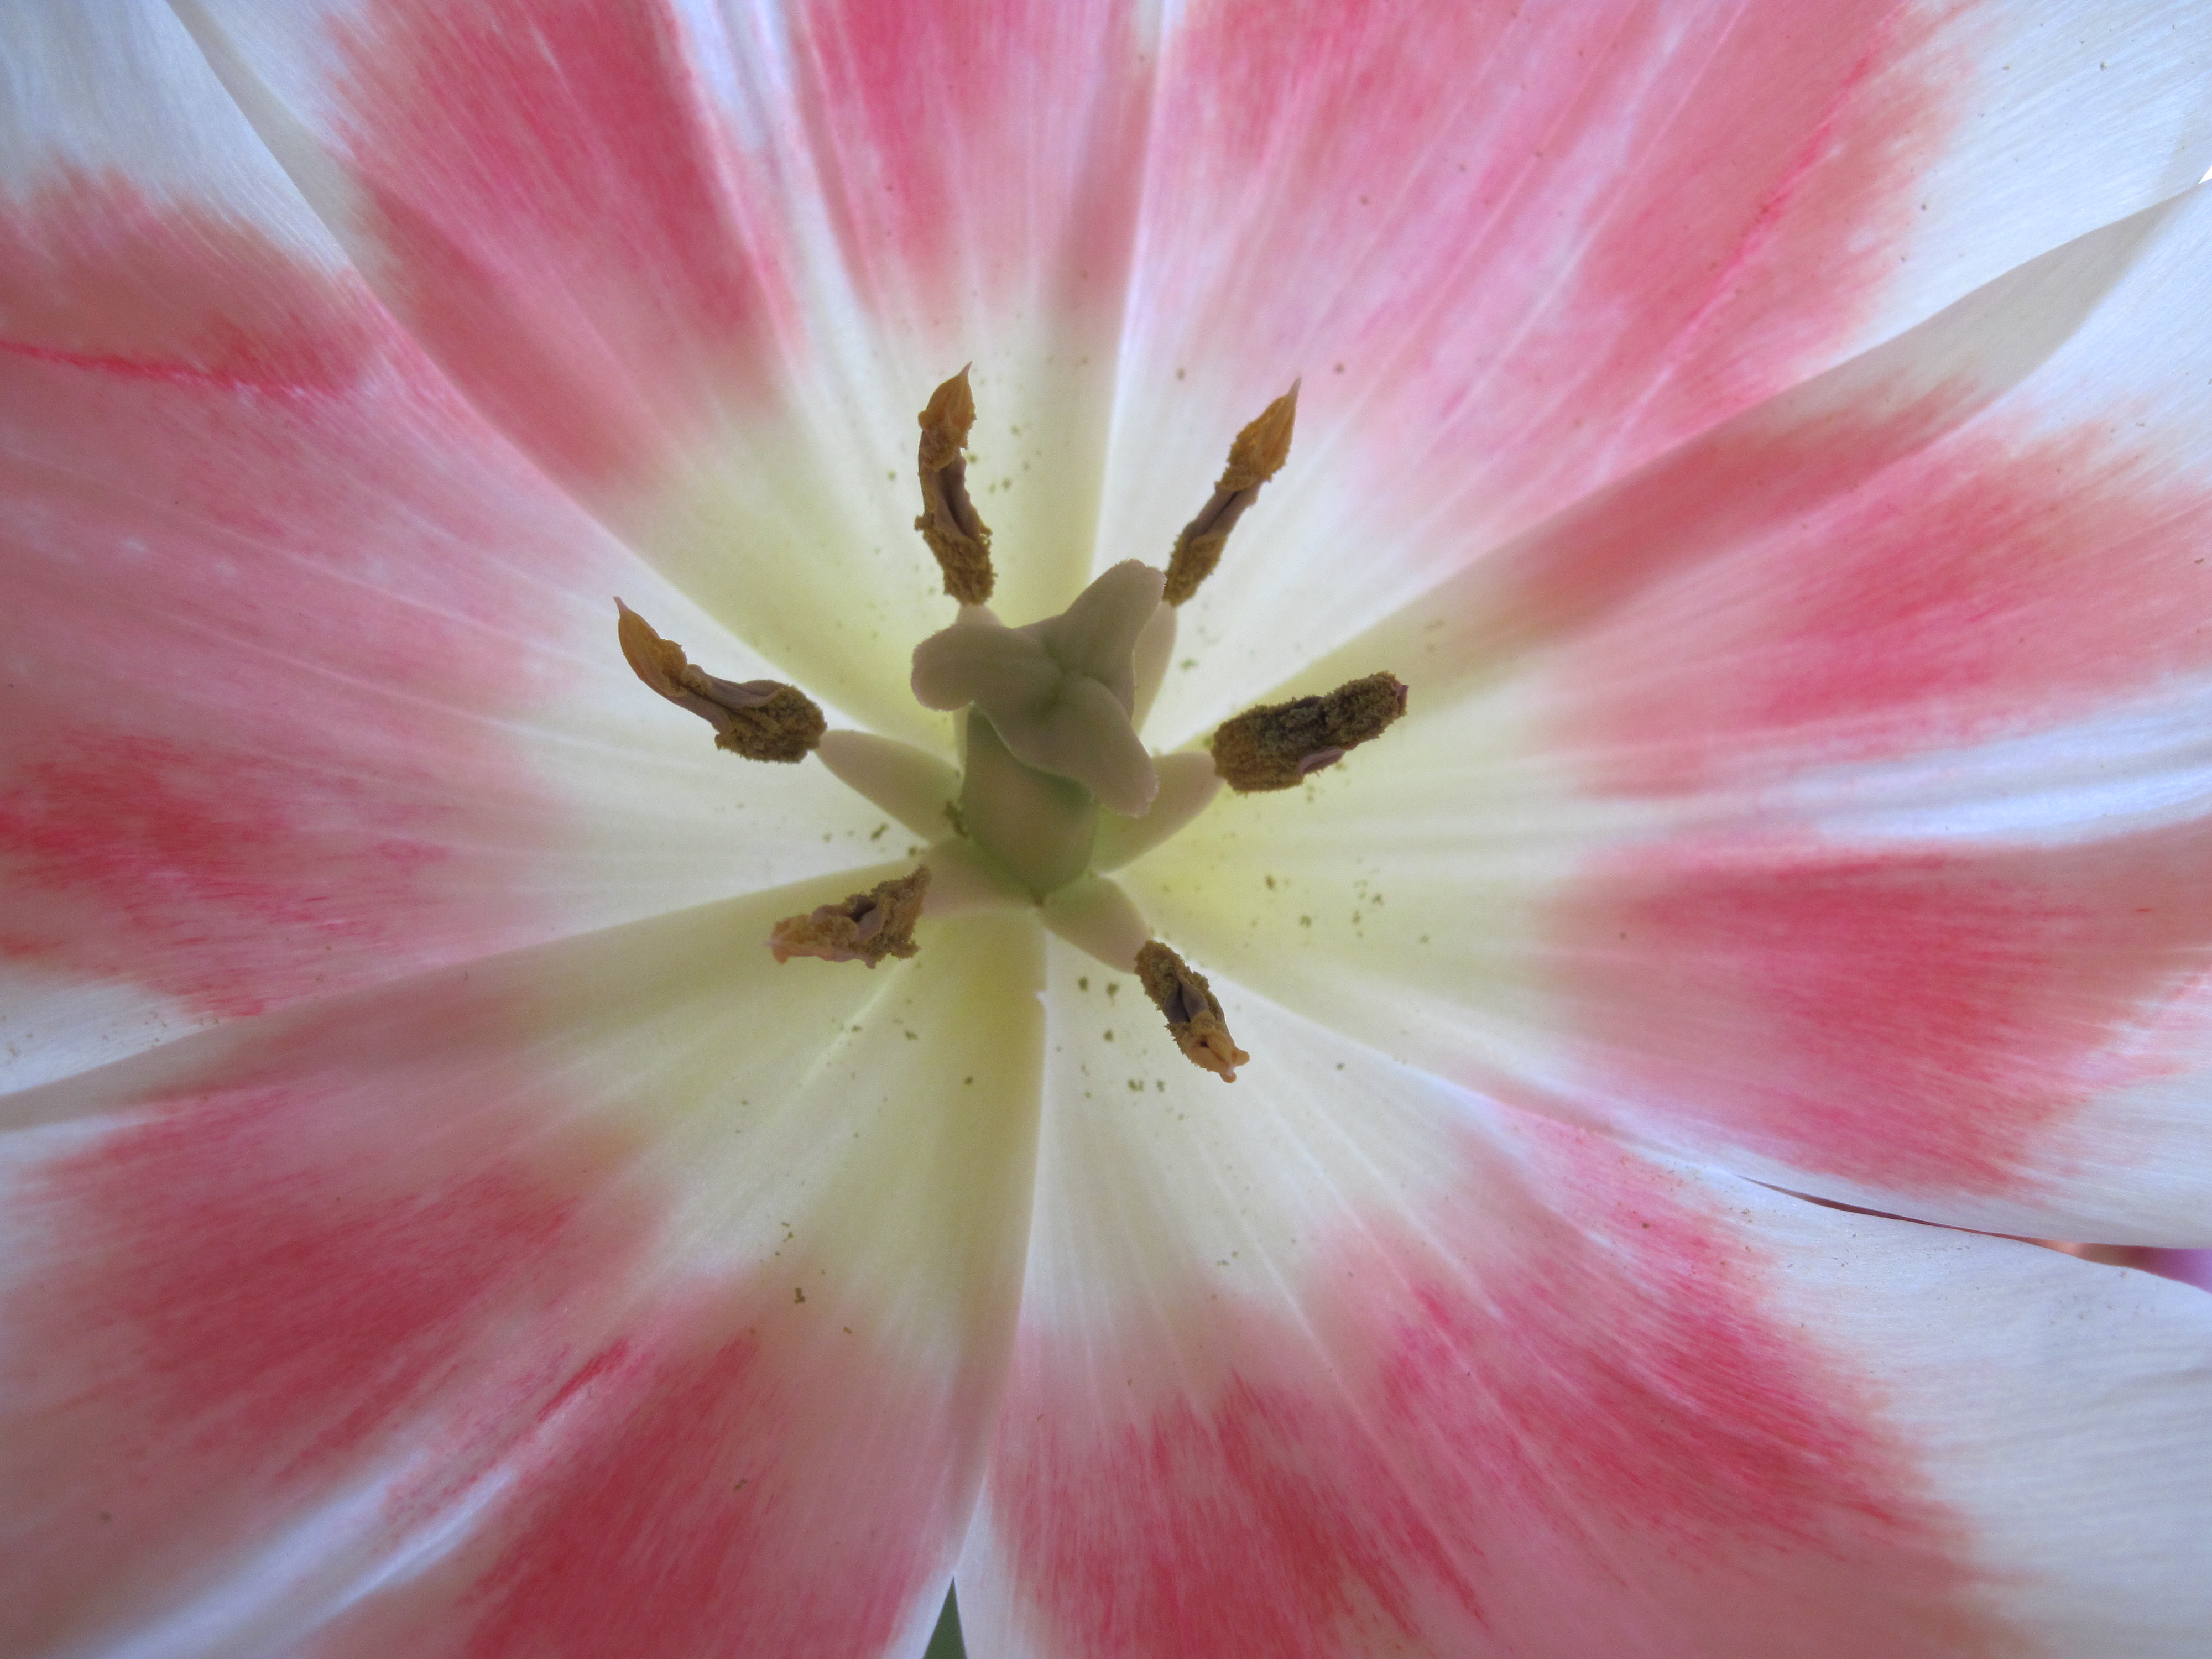 Pink tulip close-up photo